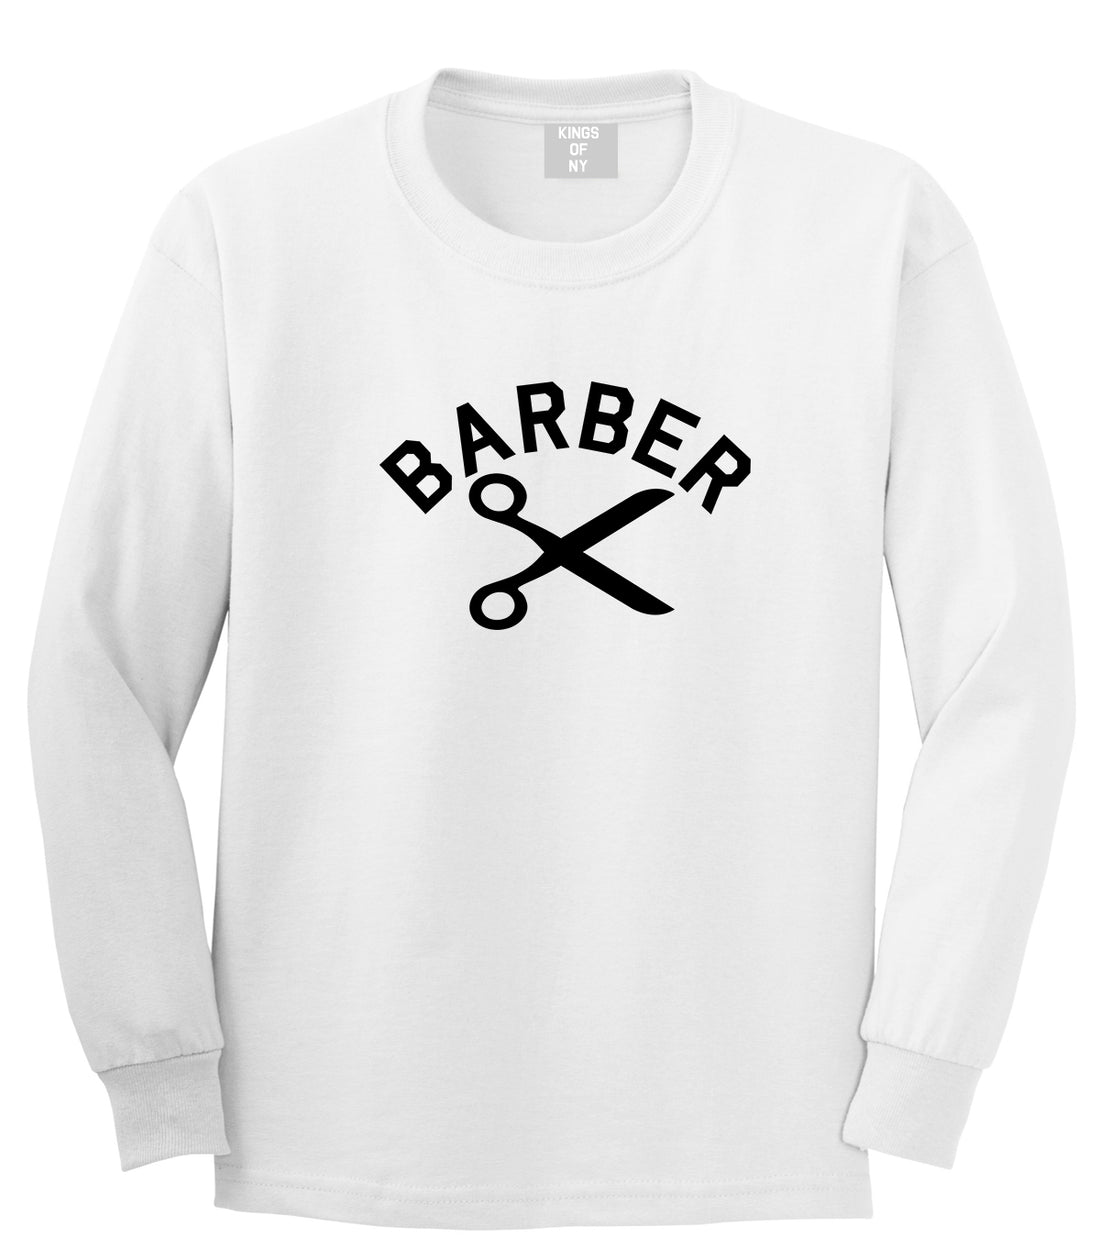 Barber Scissors White Long Sleeve T-Shirt by Kings Of NY